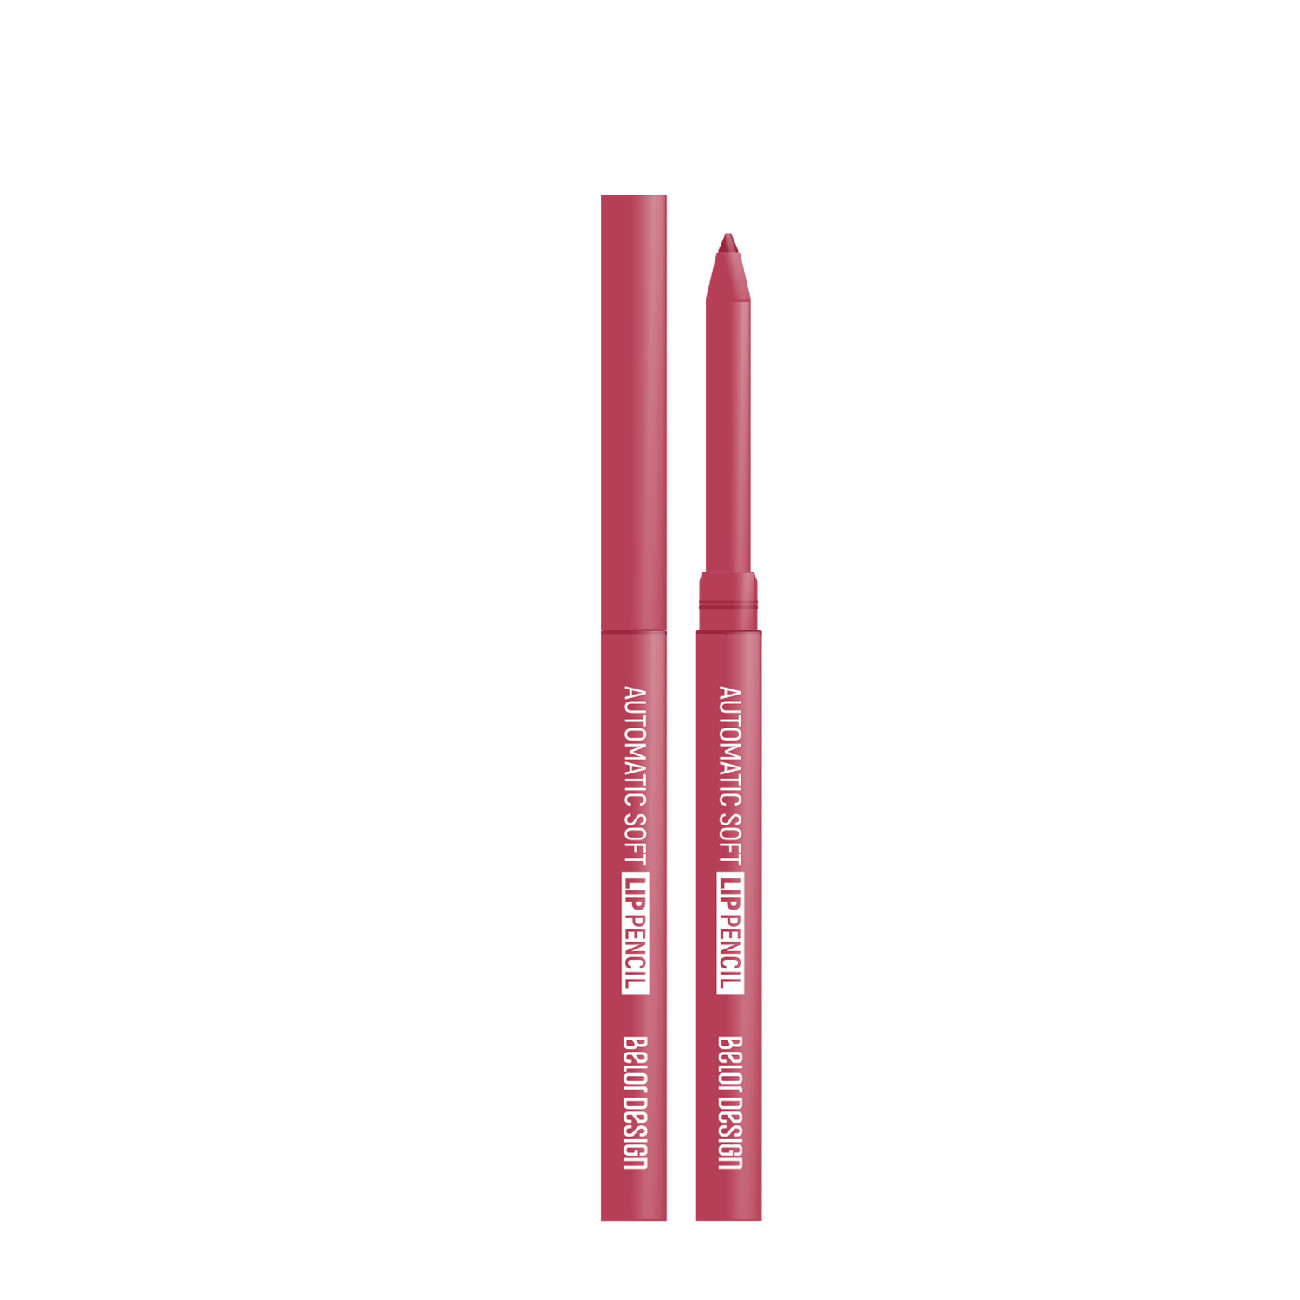 Belor Design Механический карандаш для губ Automatic soft lippencil, тон 204, Coral